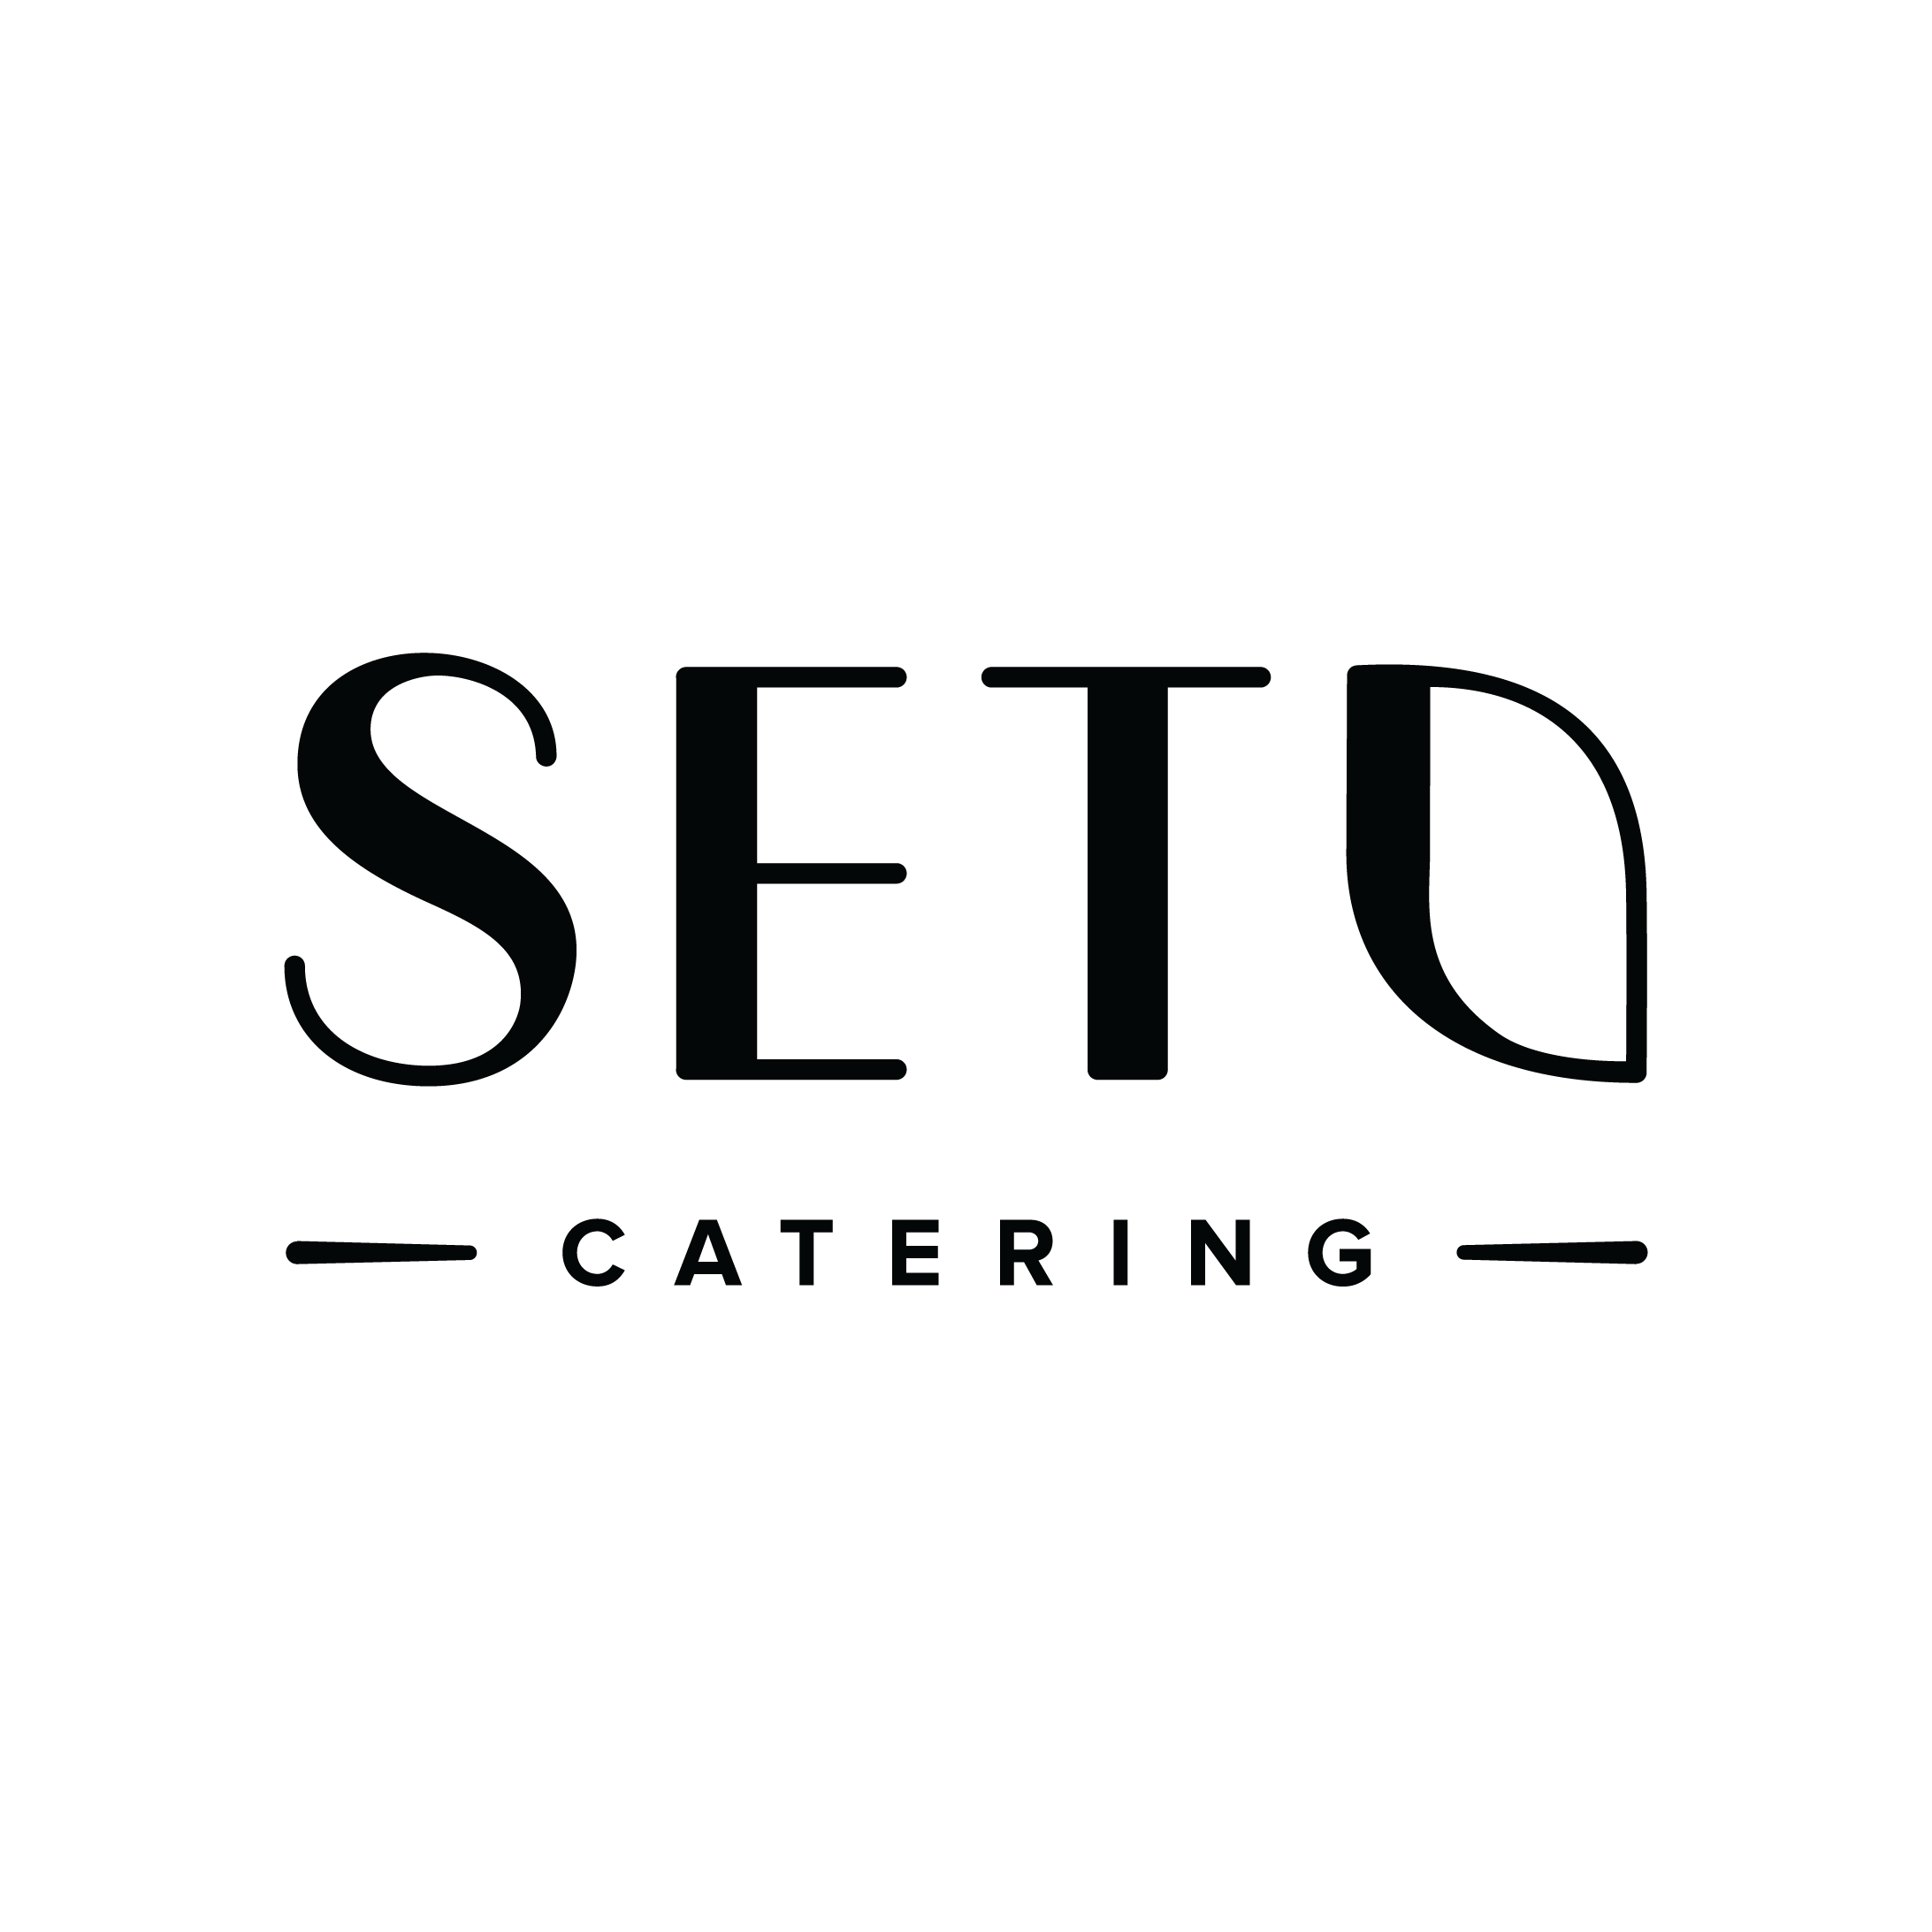 Seto Catering